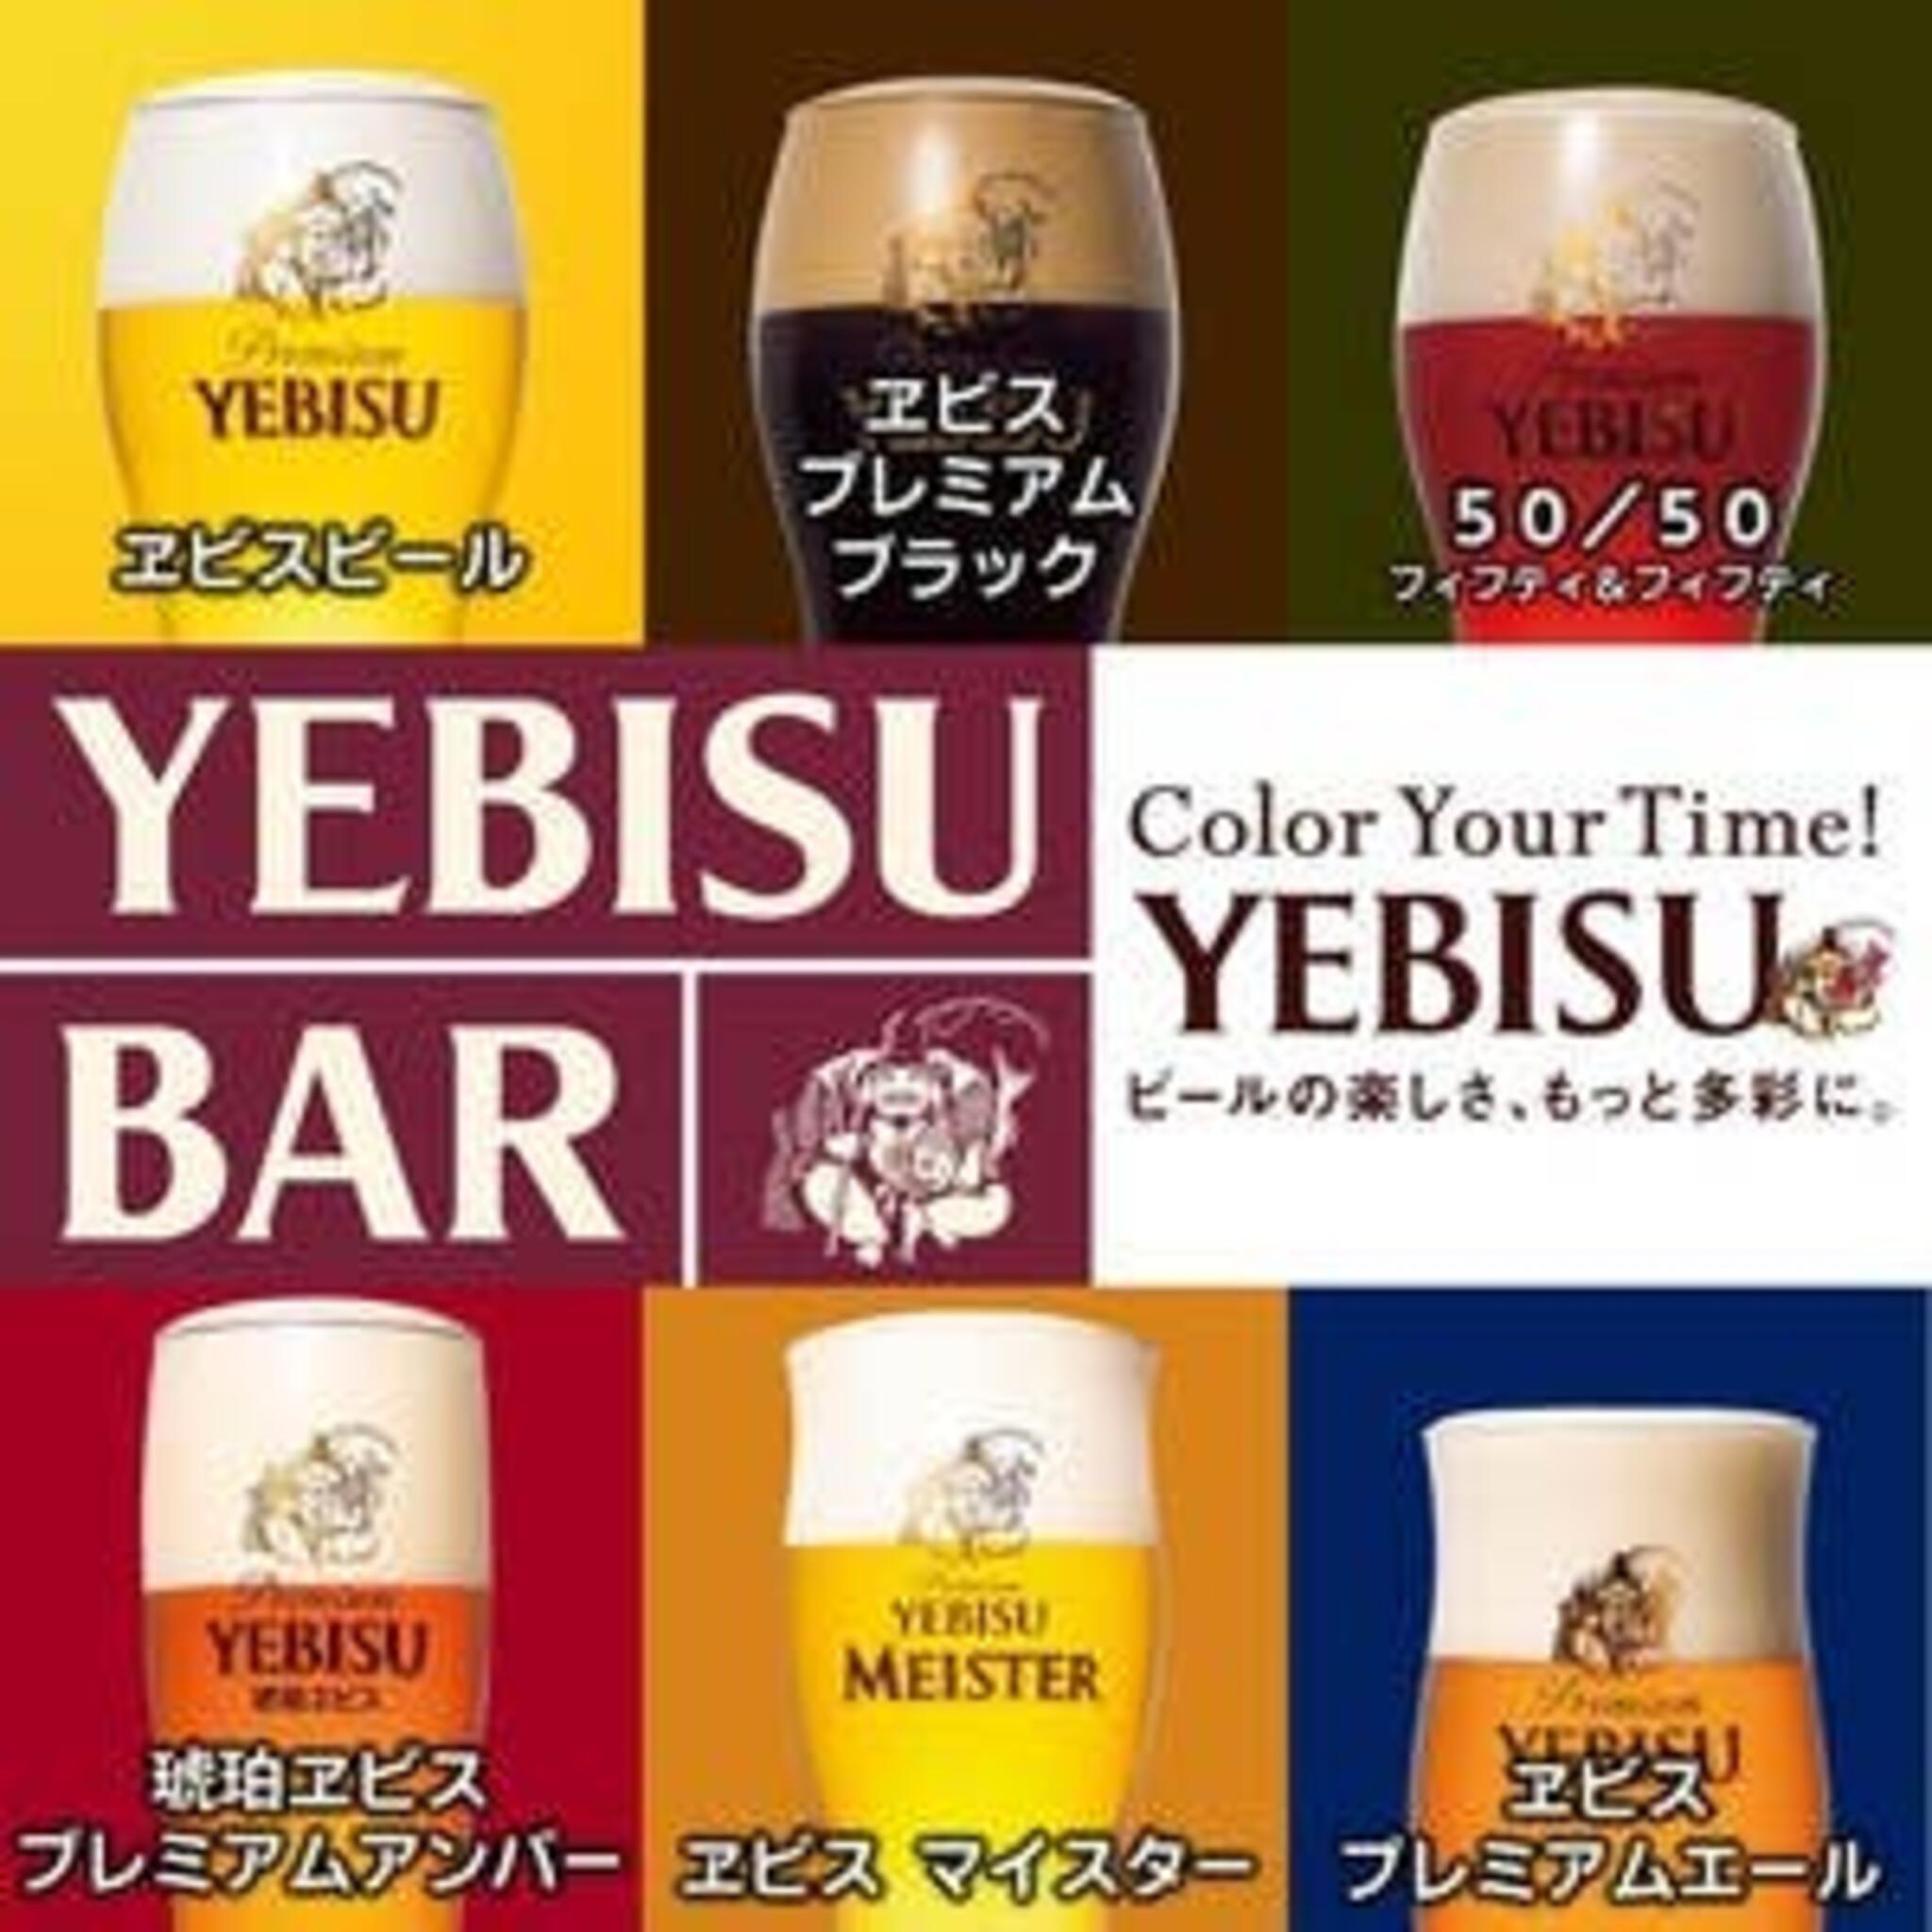 YEBISU BAR 京都ヨドバシ店の代表写真5